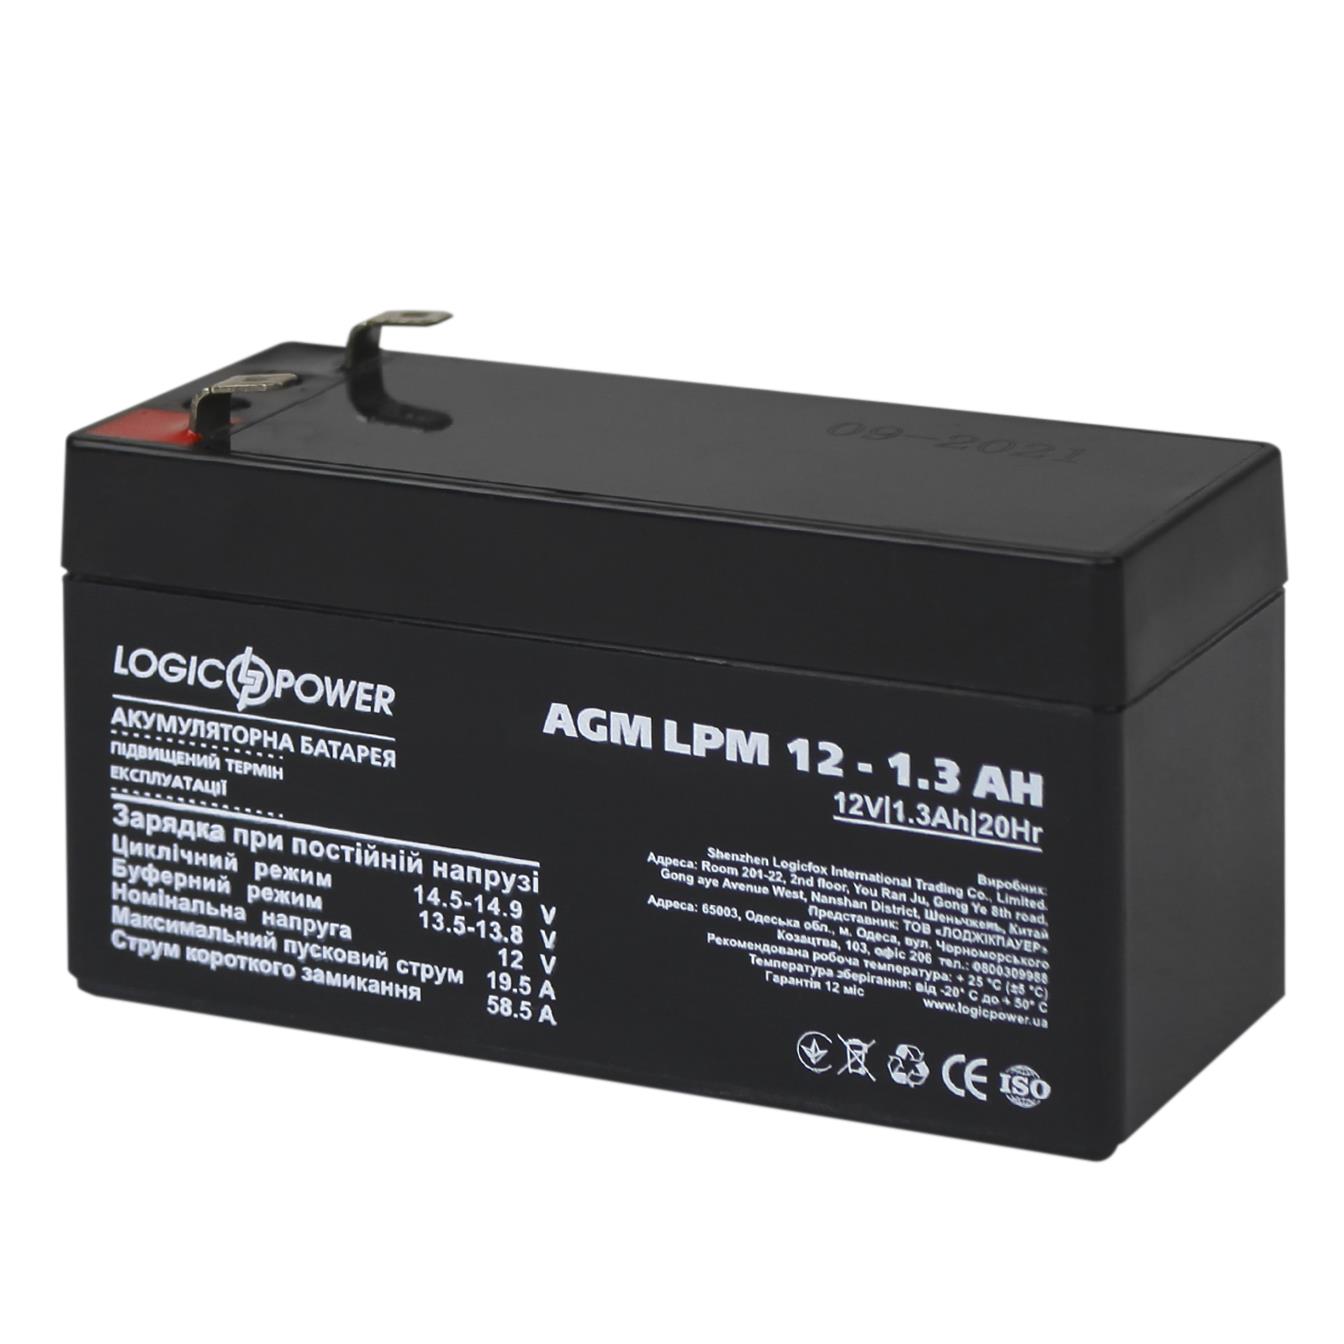 Характеристики аккумулятор свинцово-кислотный LogicPower AGM LPM 12V - 1.3 Ah (4131)